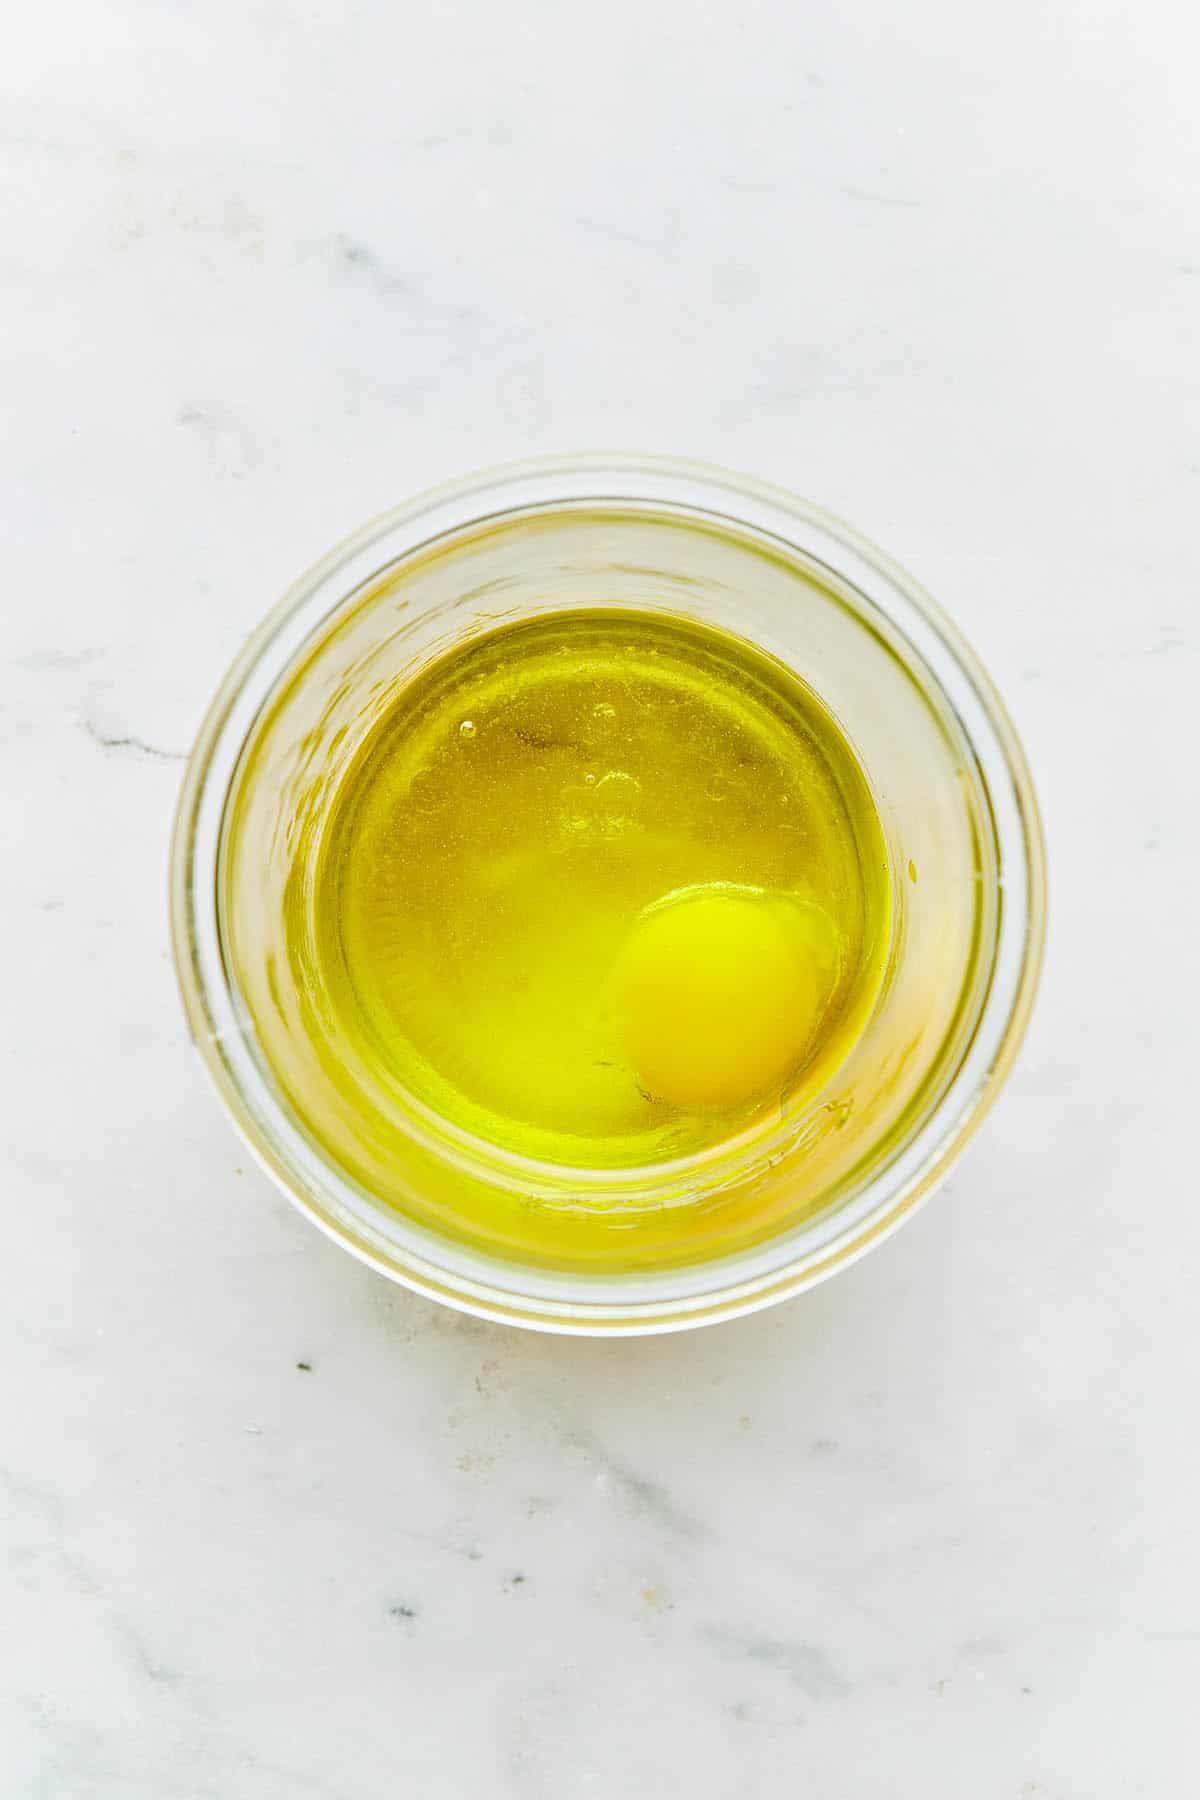 A jar of oil with an egg inside the jar.